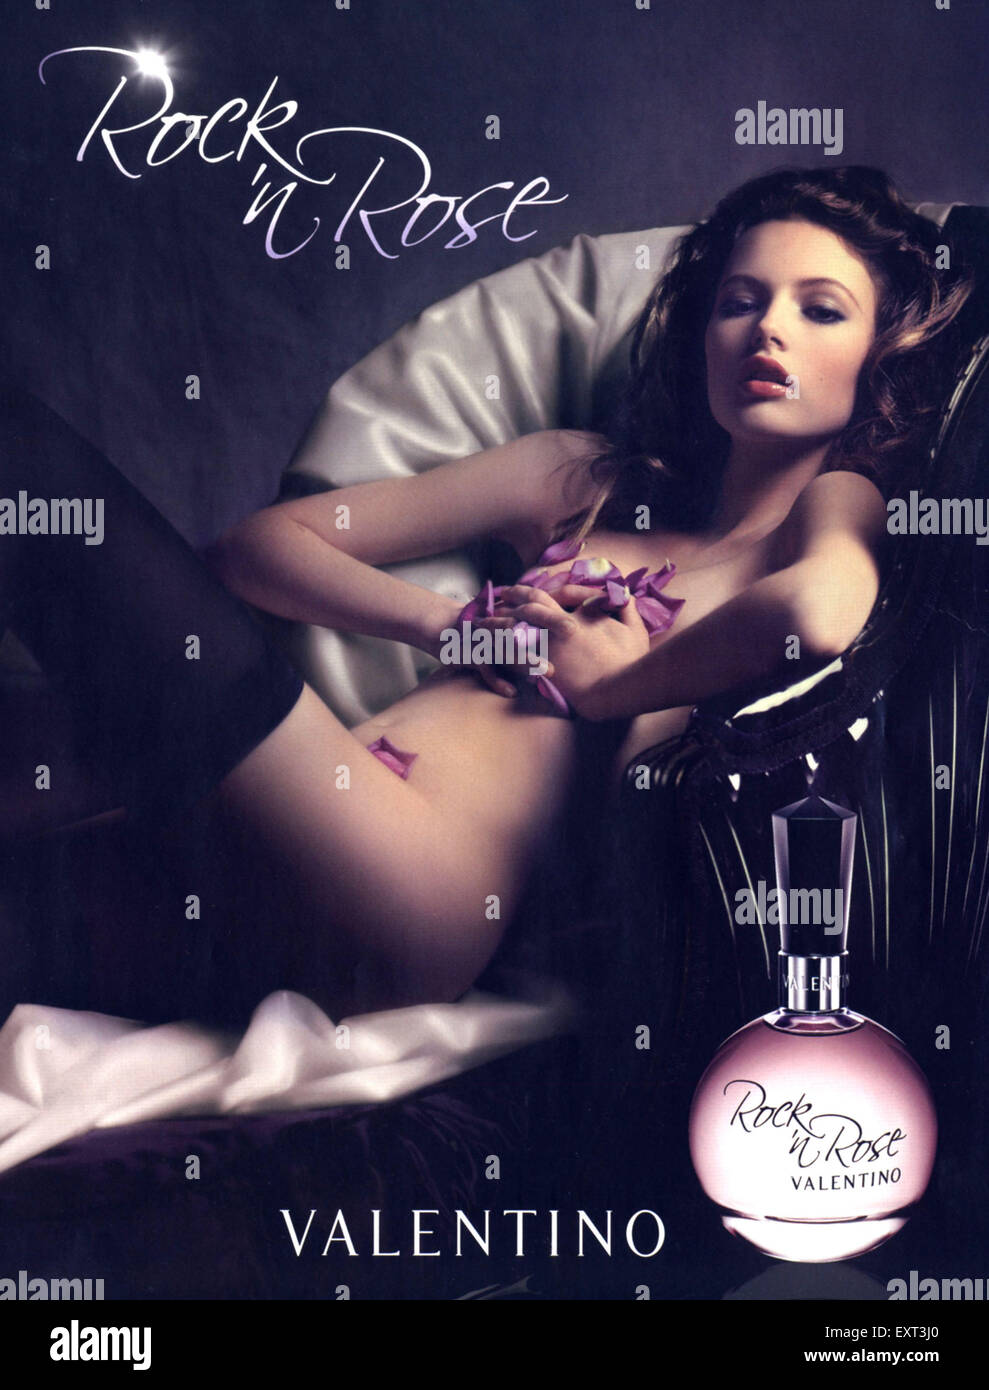 2000s UK Valentino Rock n Rose Magazine Advert Stock Photo - Alamy